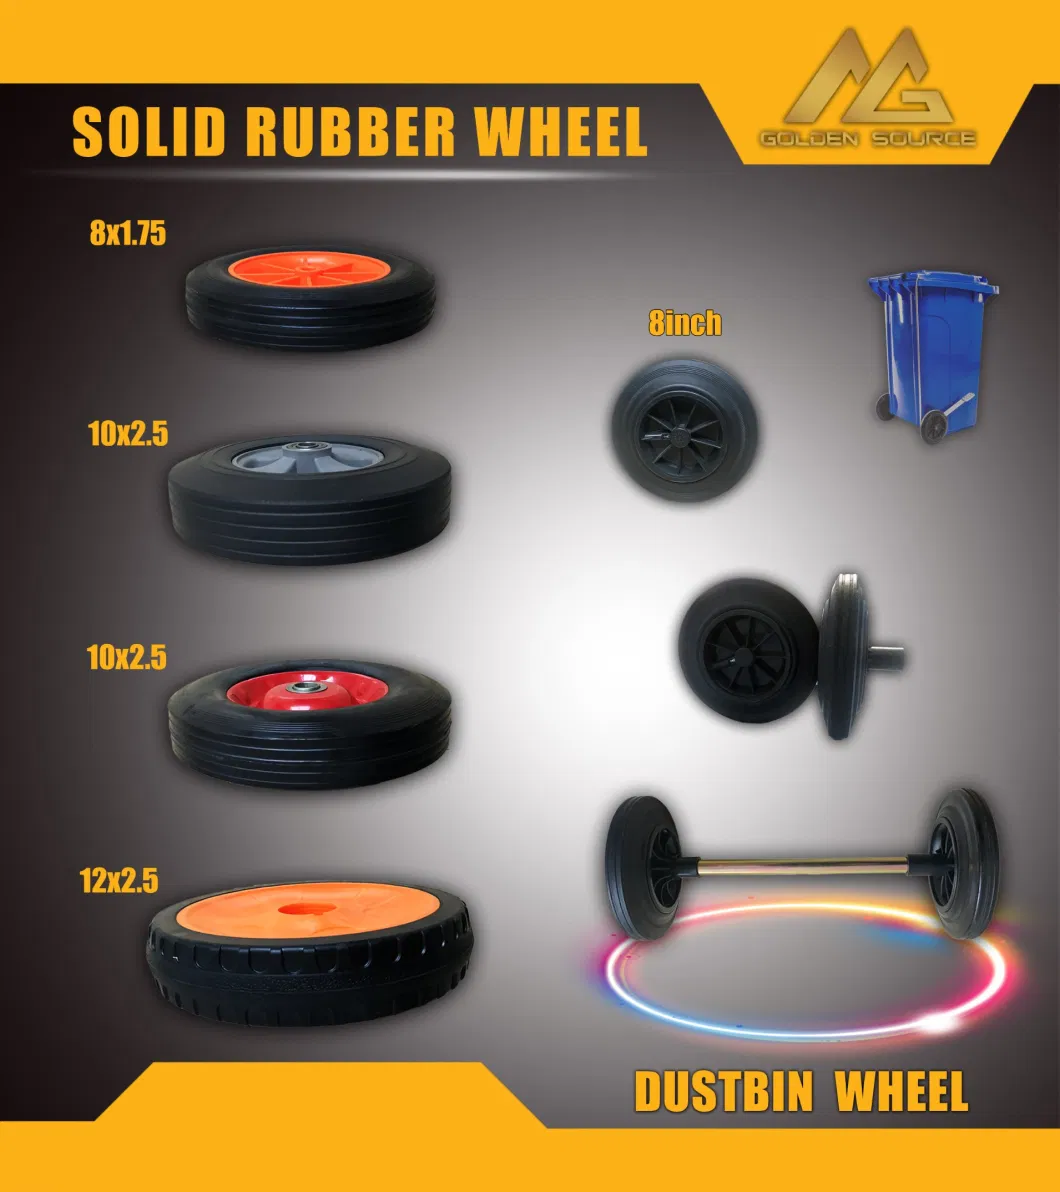 Pneumatic Rubber Wheel Air Tyre for Wheelbarrow Tire Trolley Wheel (4.00-8)